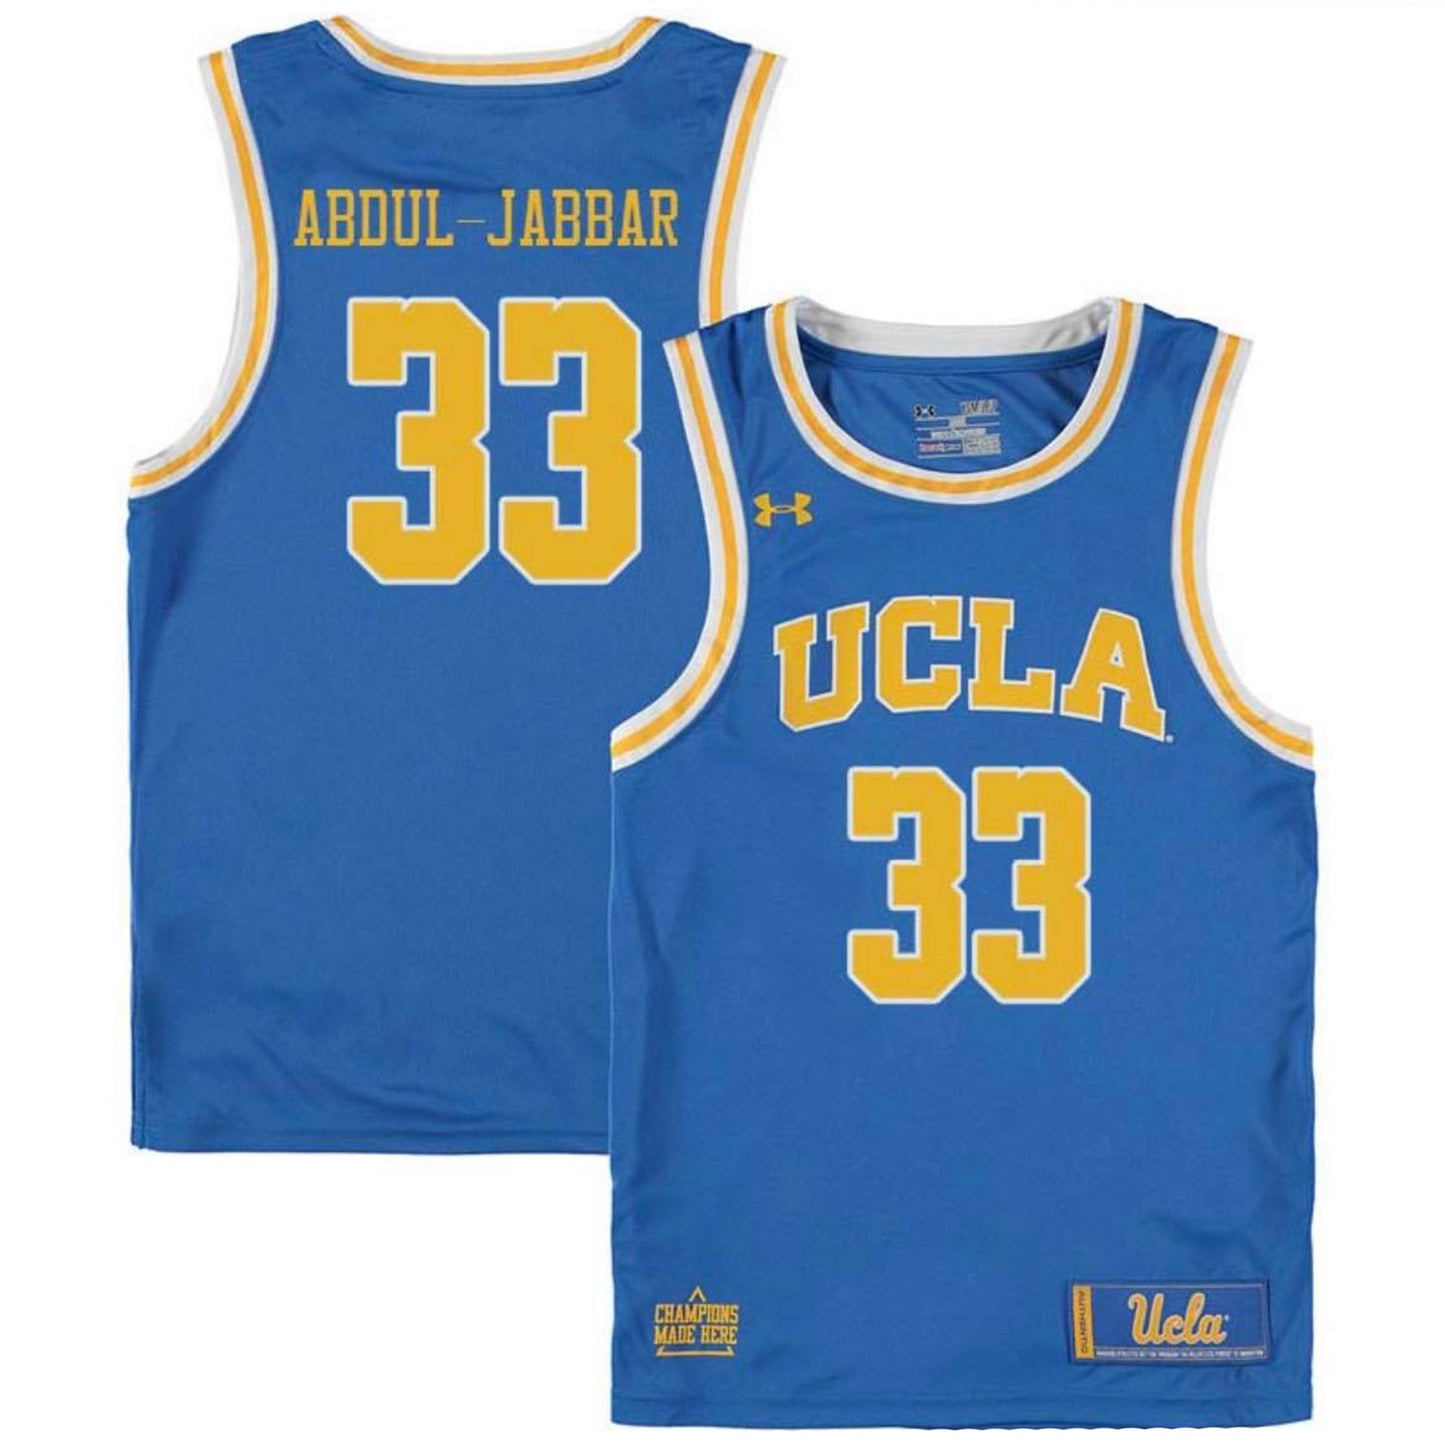 NCAAB Kareem Abdul-Jabbar UCLA 33 Jersey